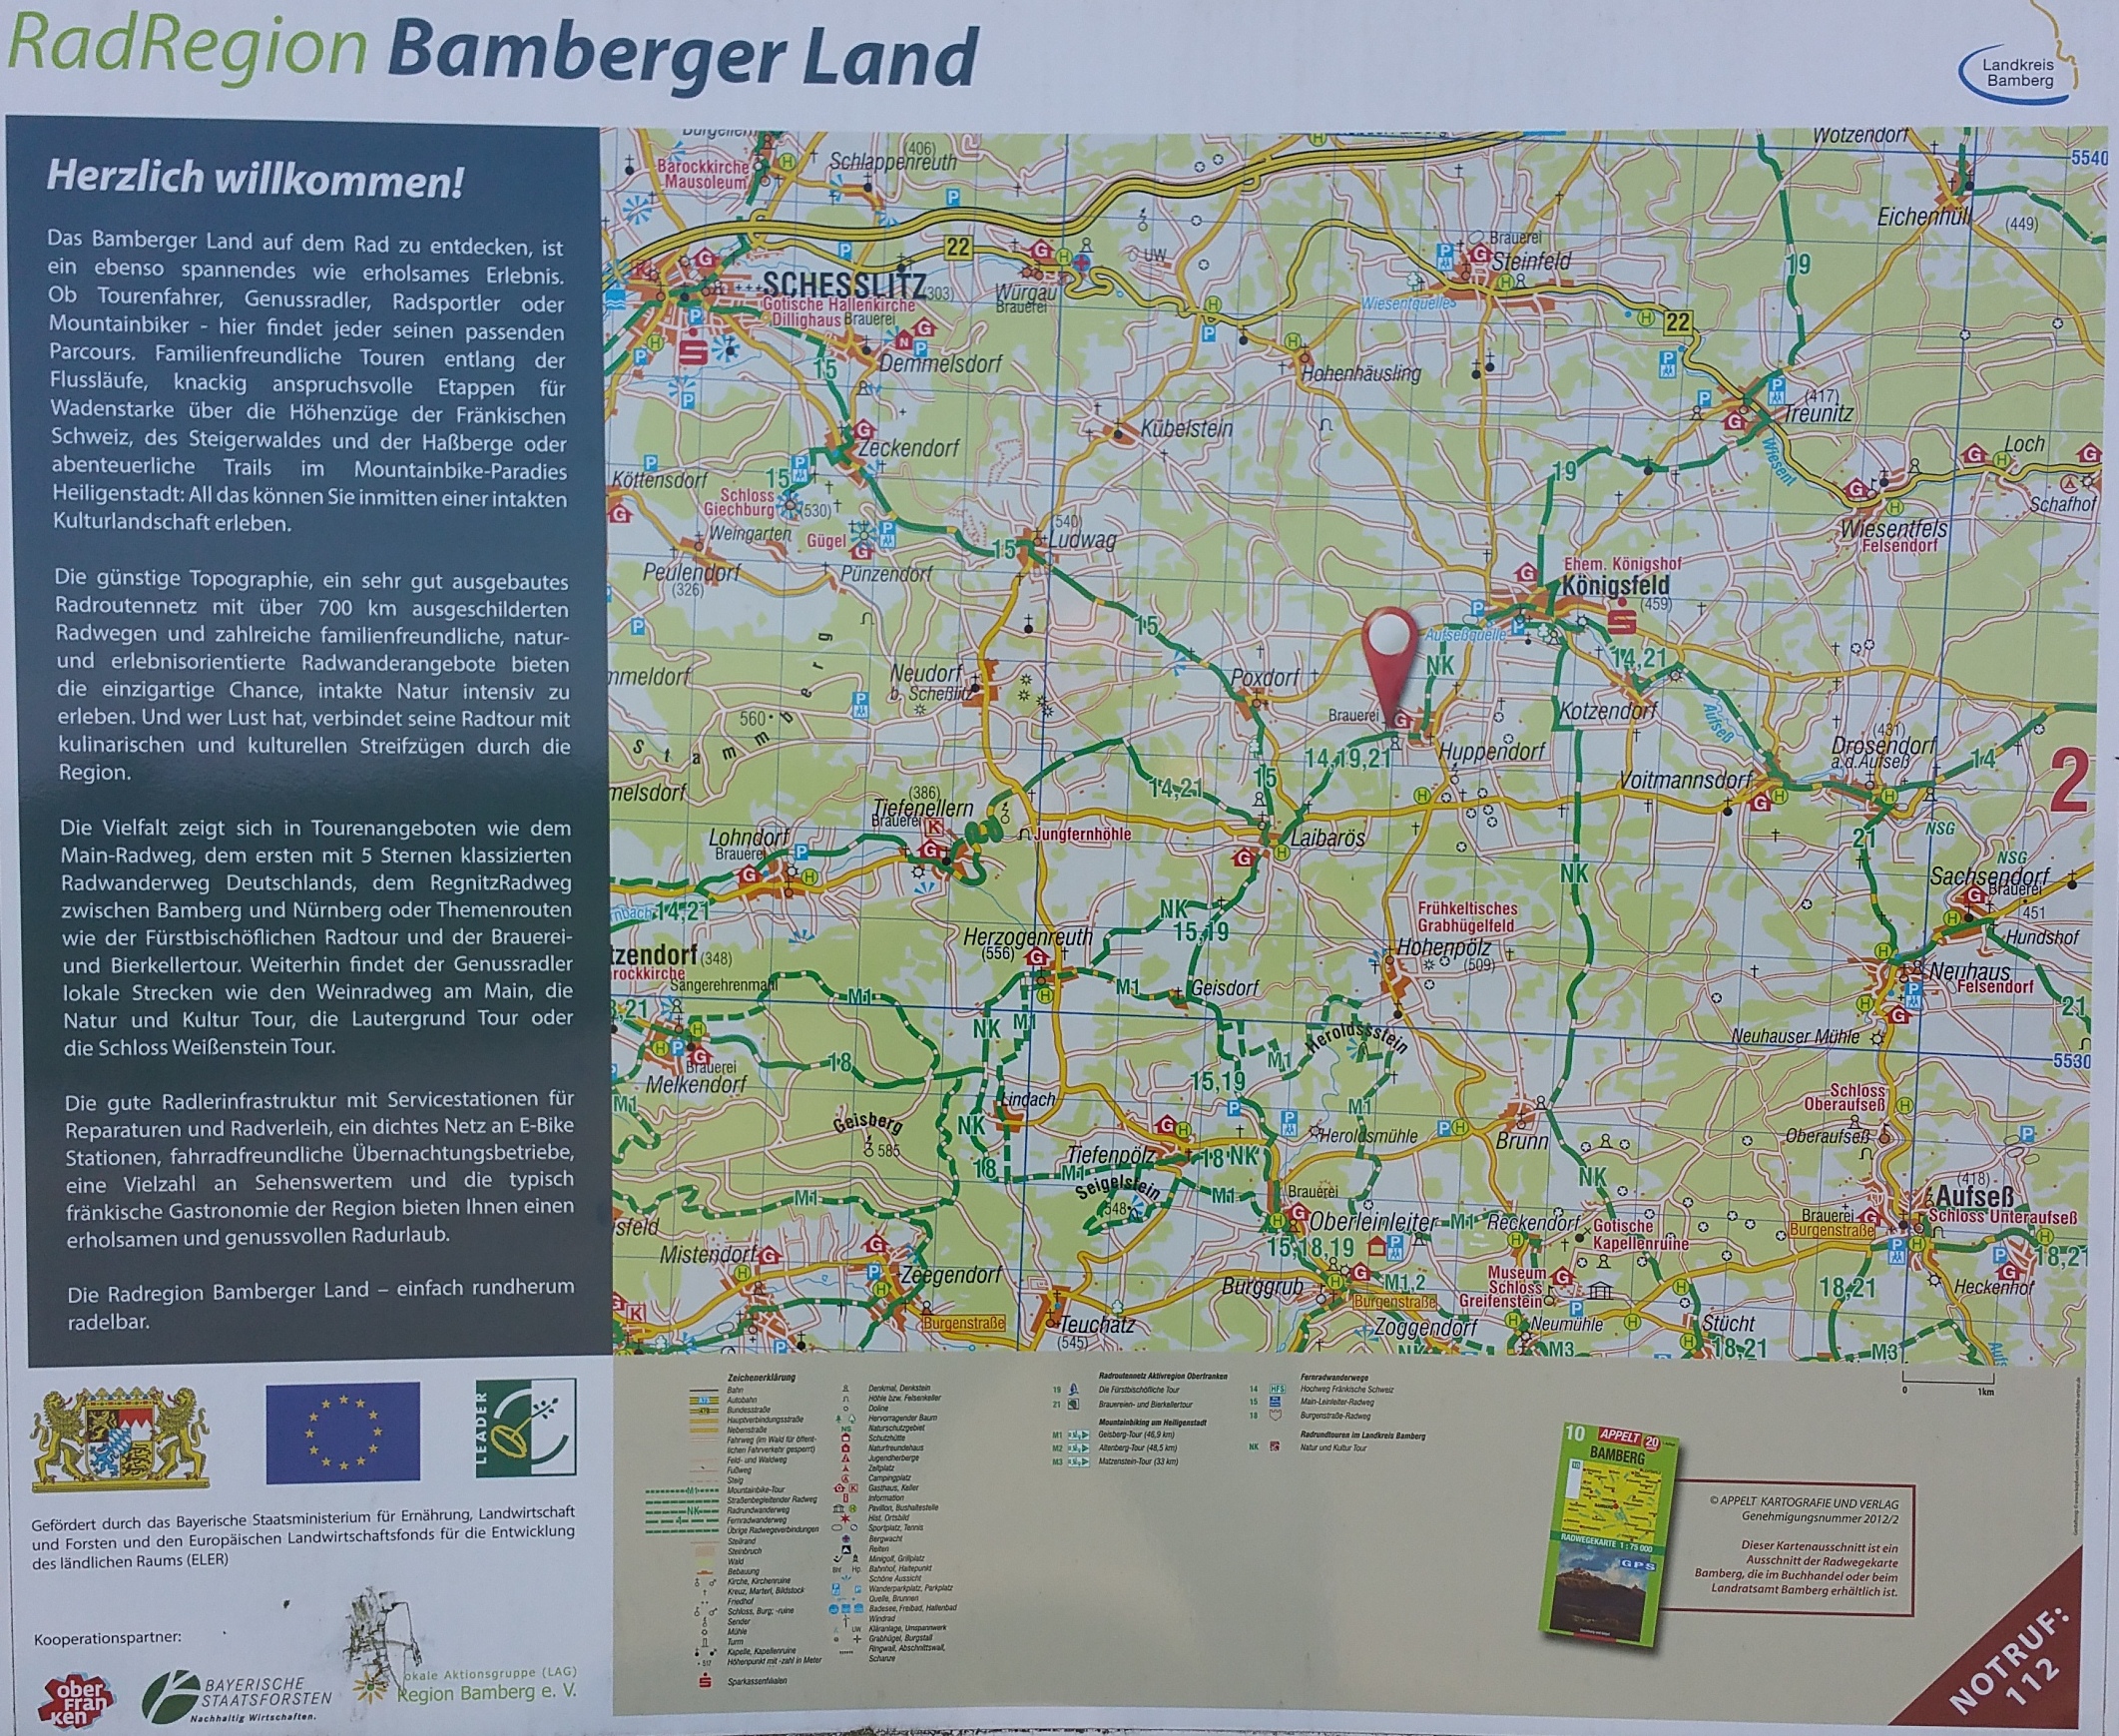 RadRegion Bamberger Land